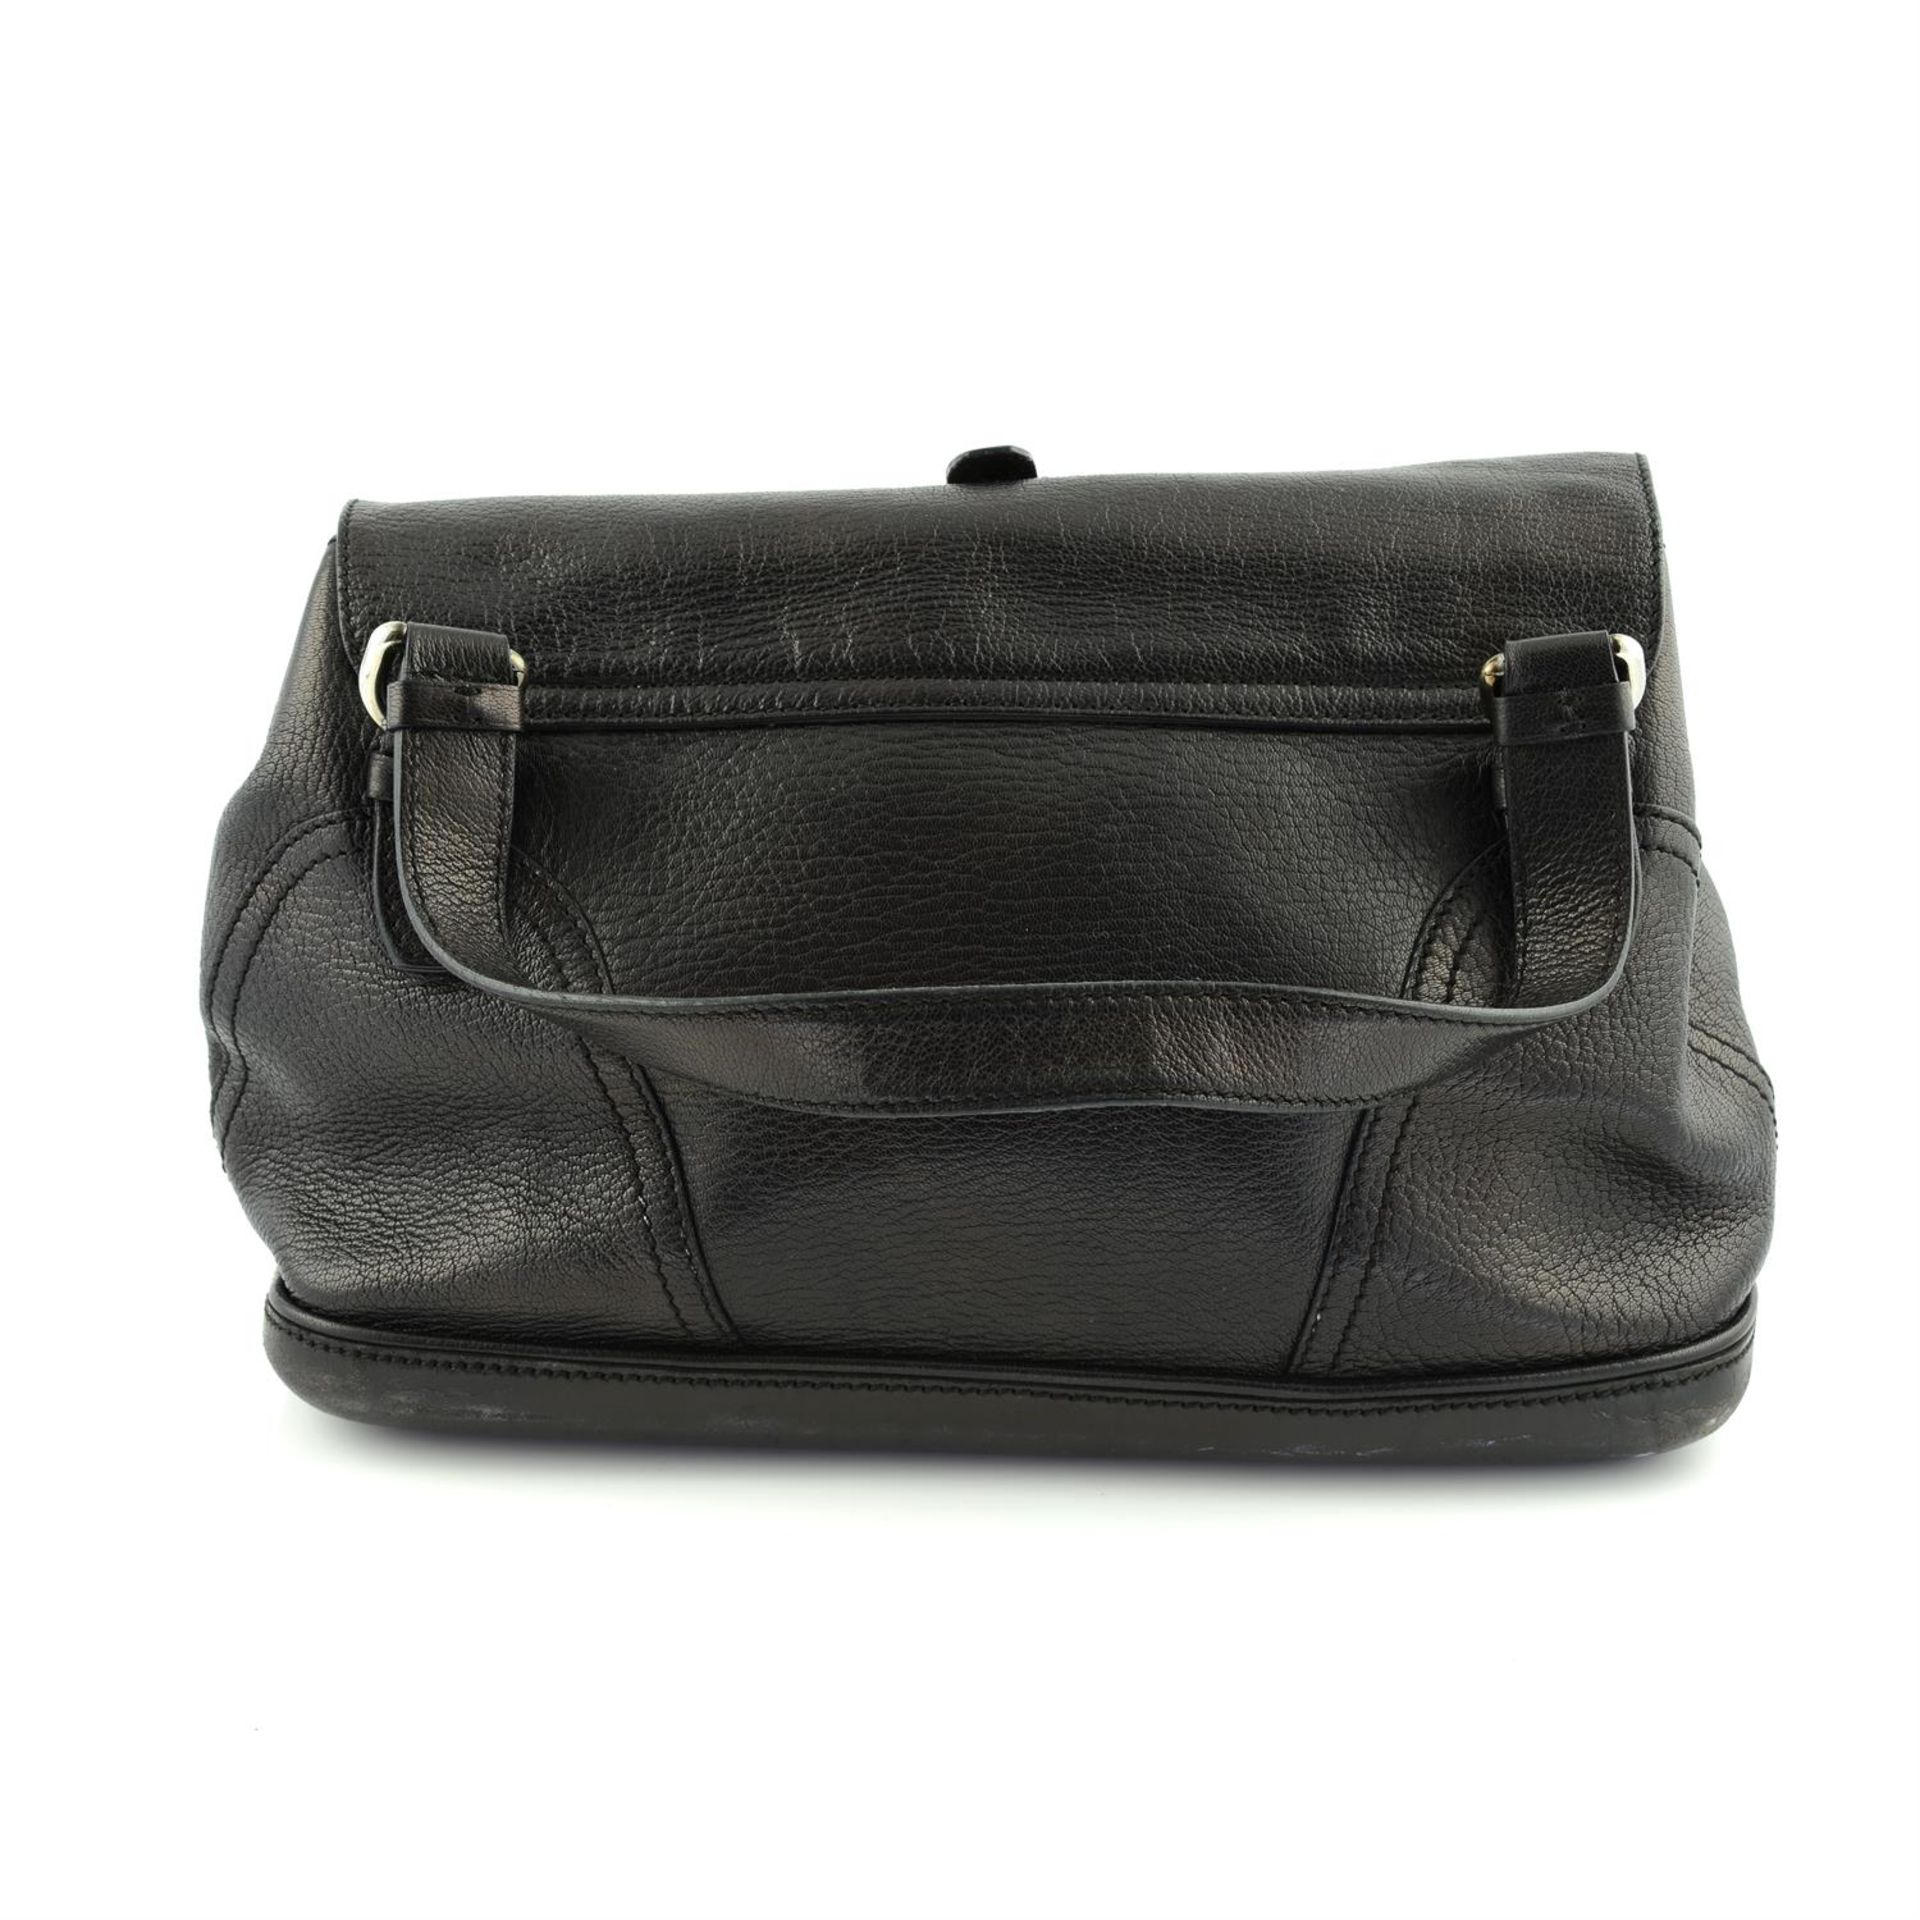 CÉLINE - a black leather handbag. - Image 2 of 6